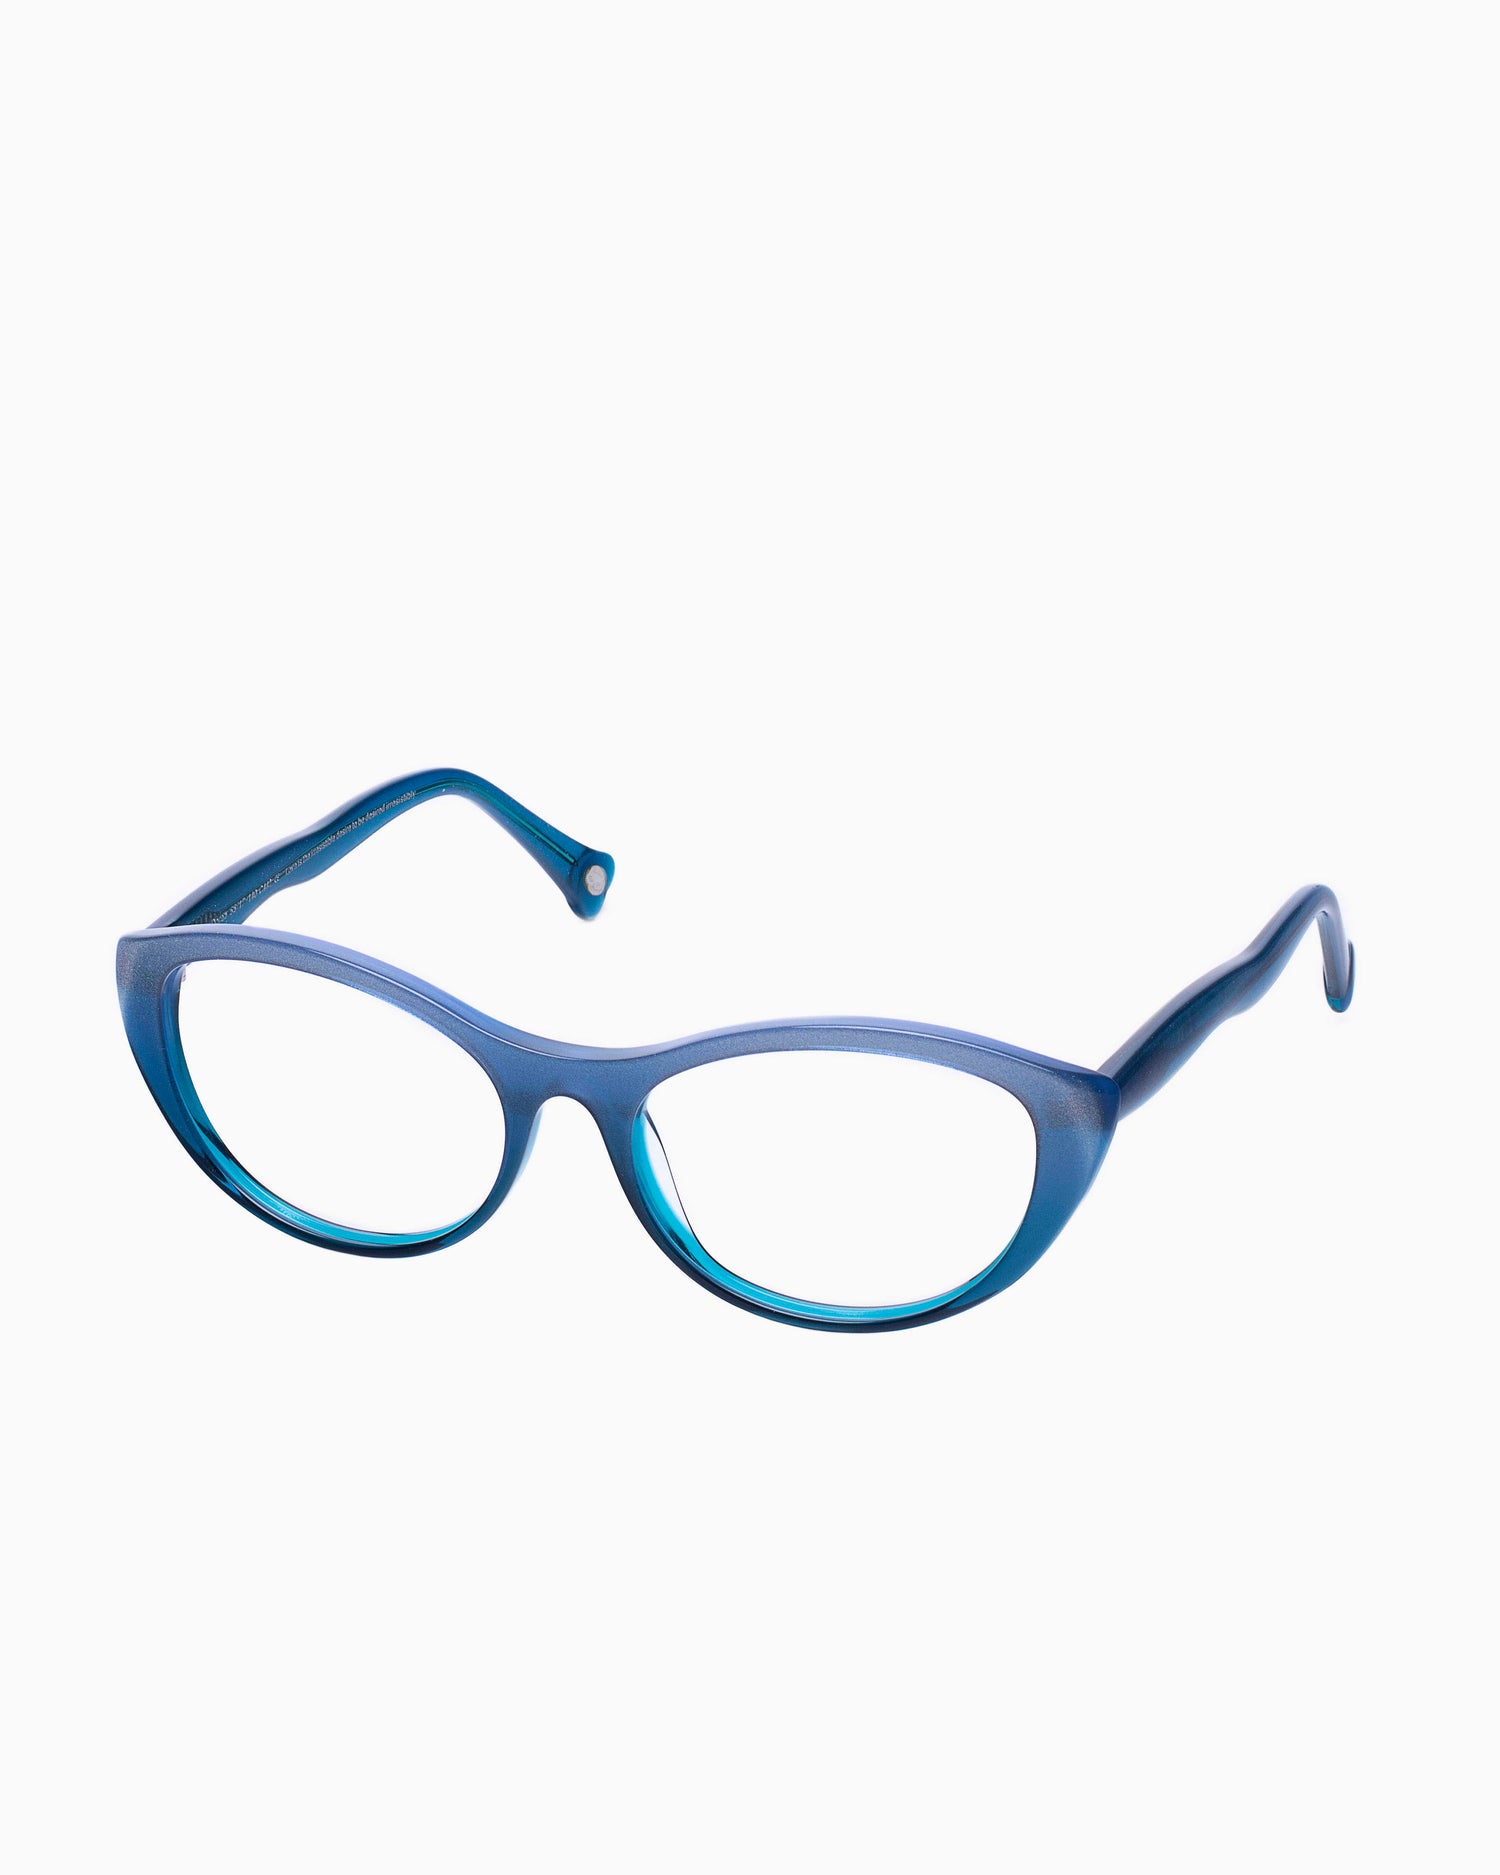 Spectacleeyeworks - Golden - C442 | glasses bar:  Marie-Sophie Dion